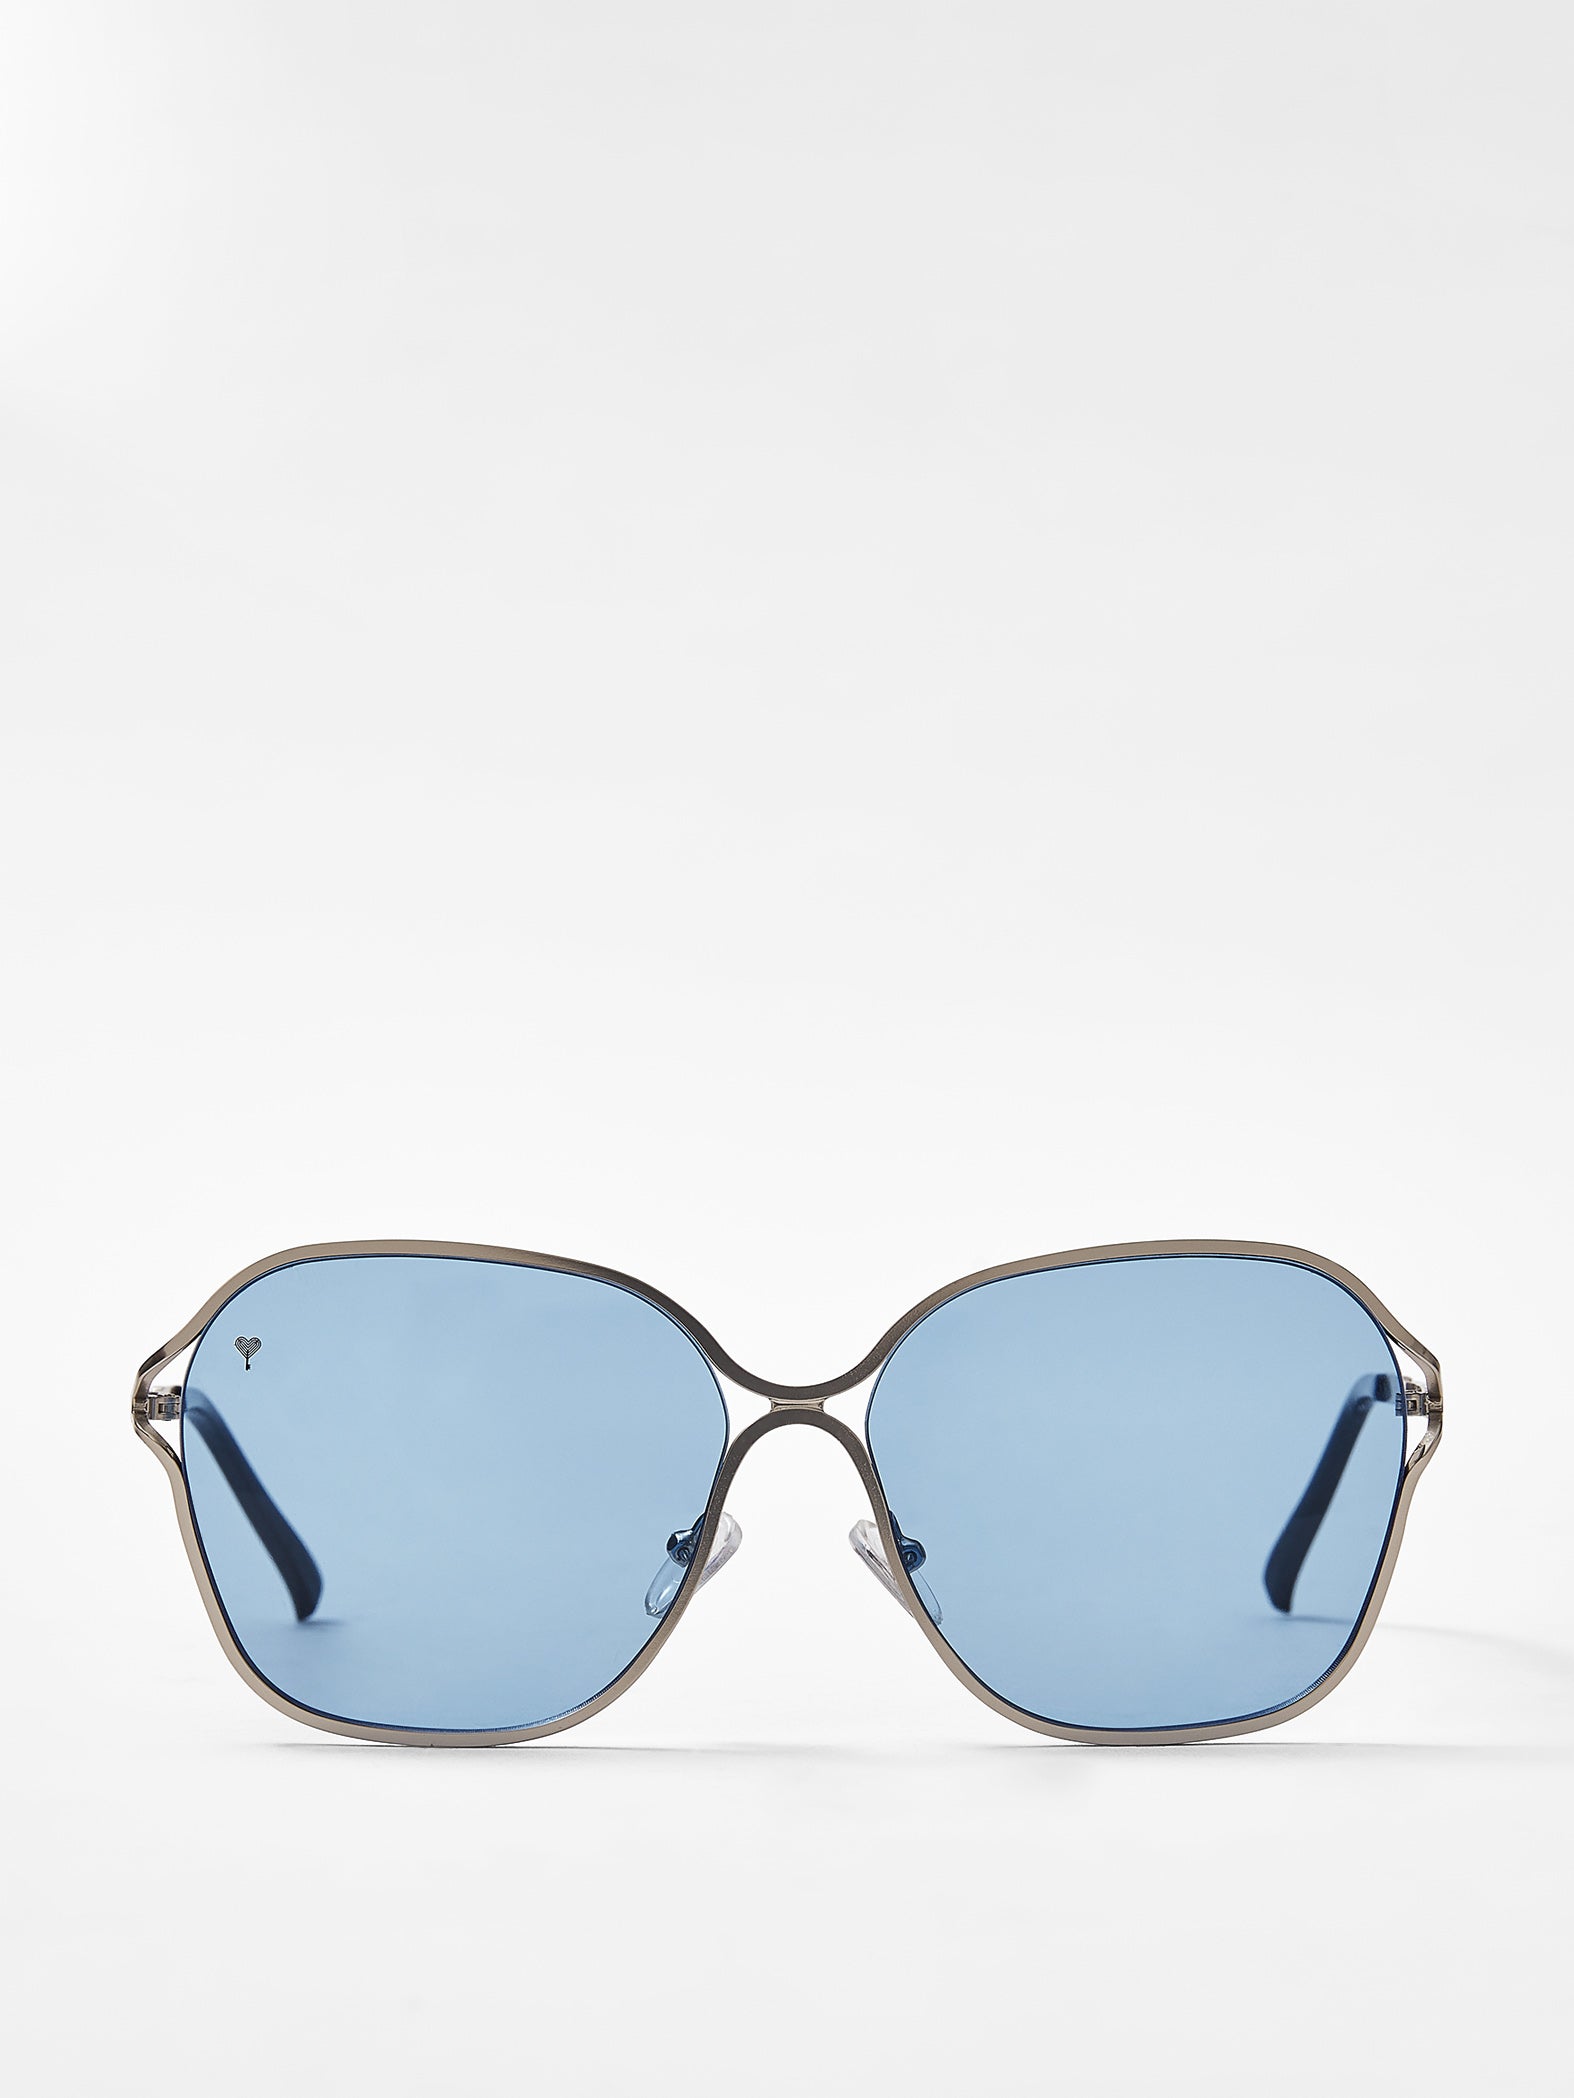 Aqua Metallic Frame Sunglasses